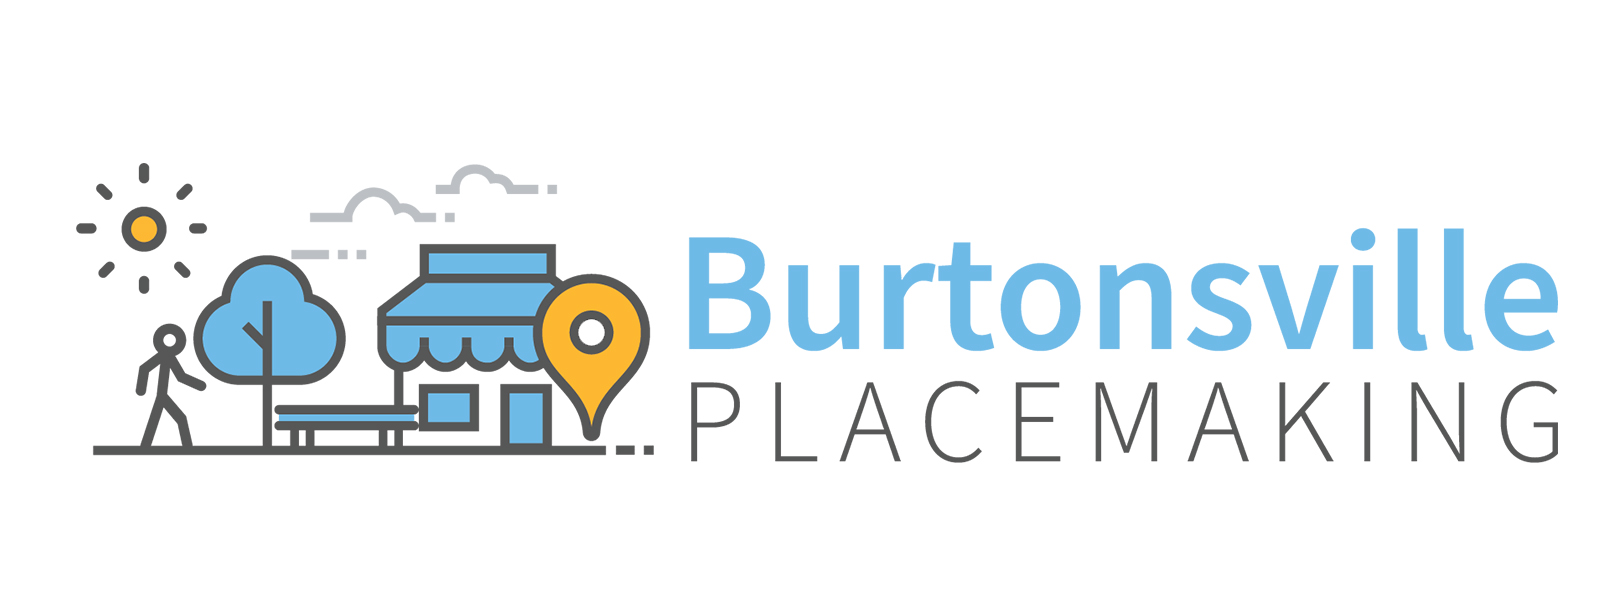 burtonsville placemaking